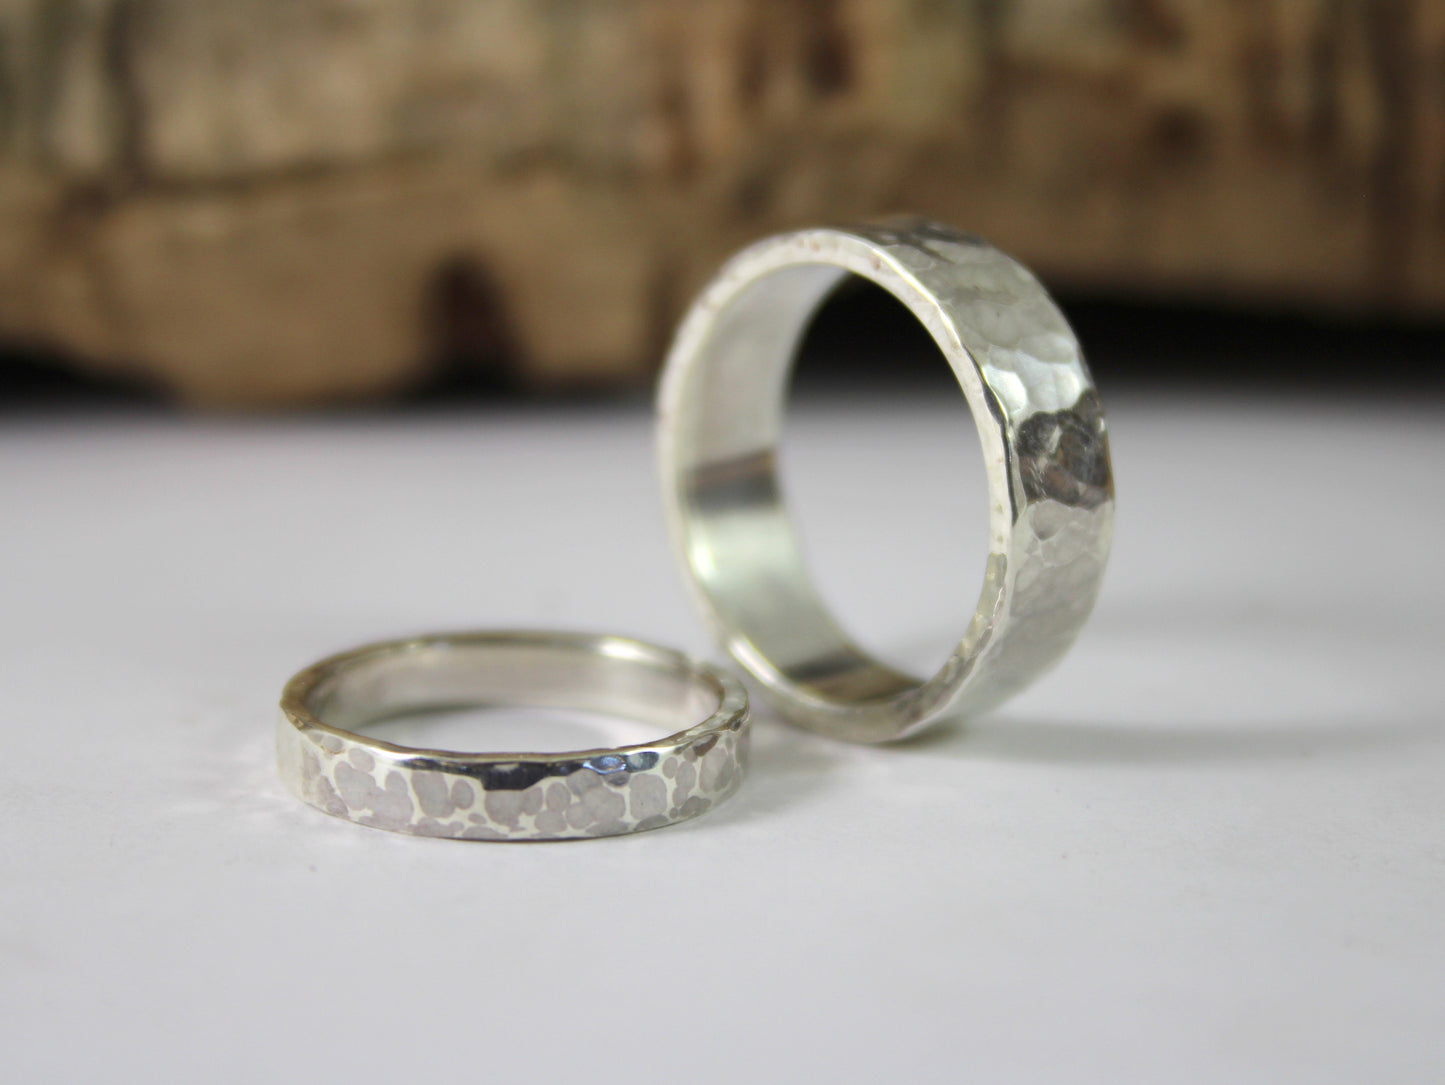 Silversmithing Workshop: Make Your Own Silver Ring